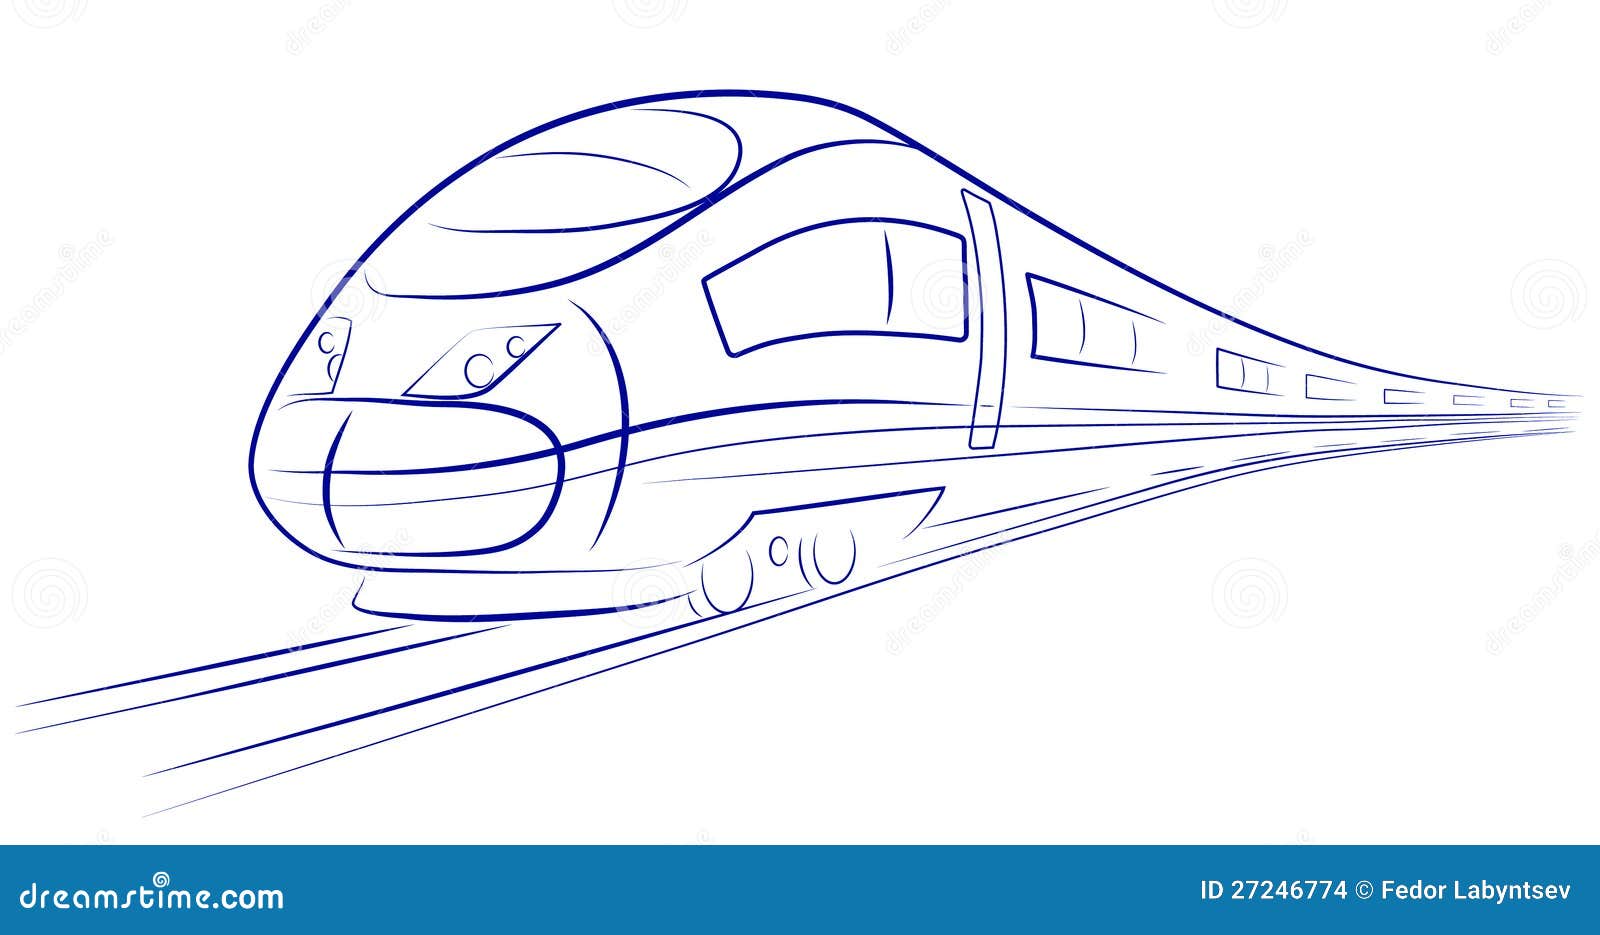 Passenger high-speed train stock vector. Illustration of ...